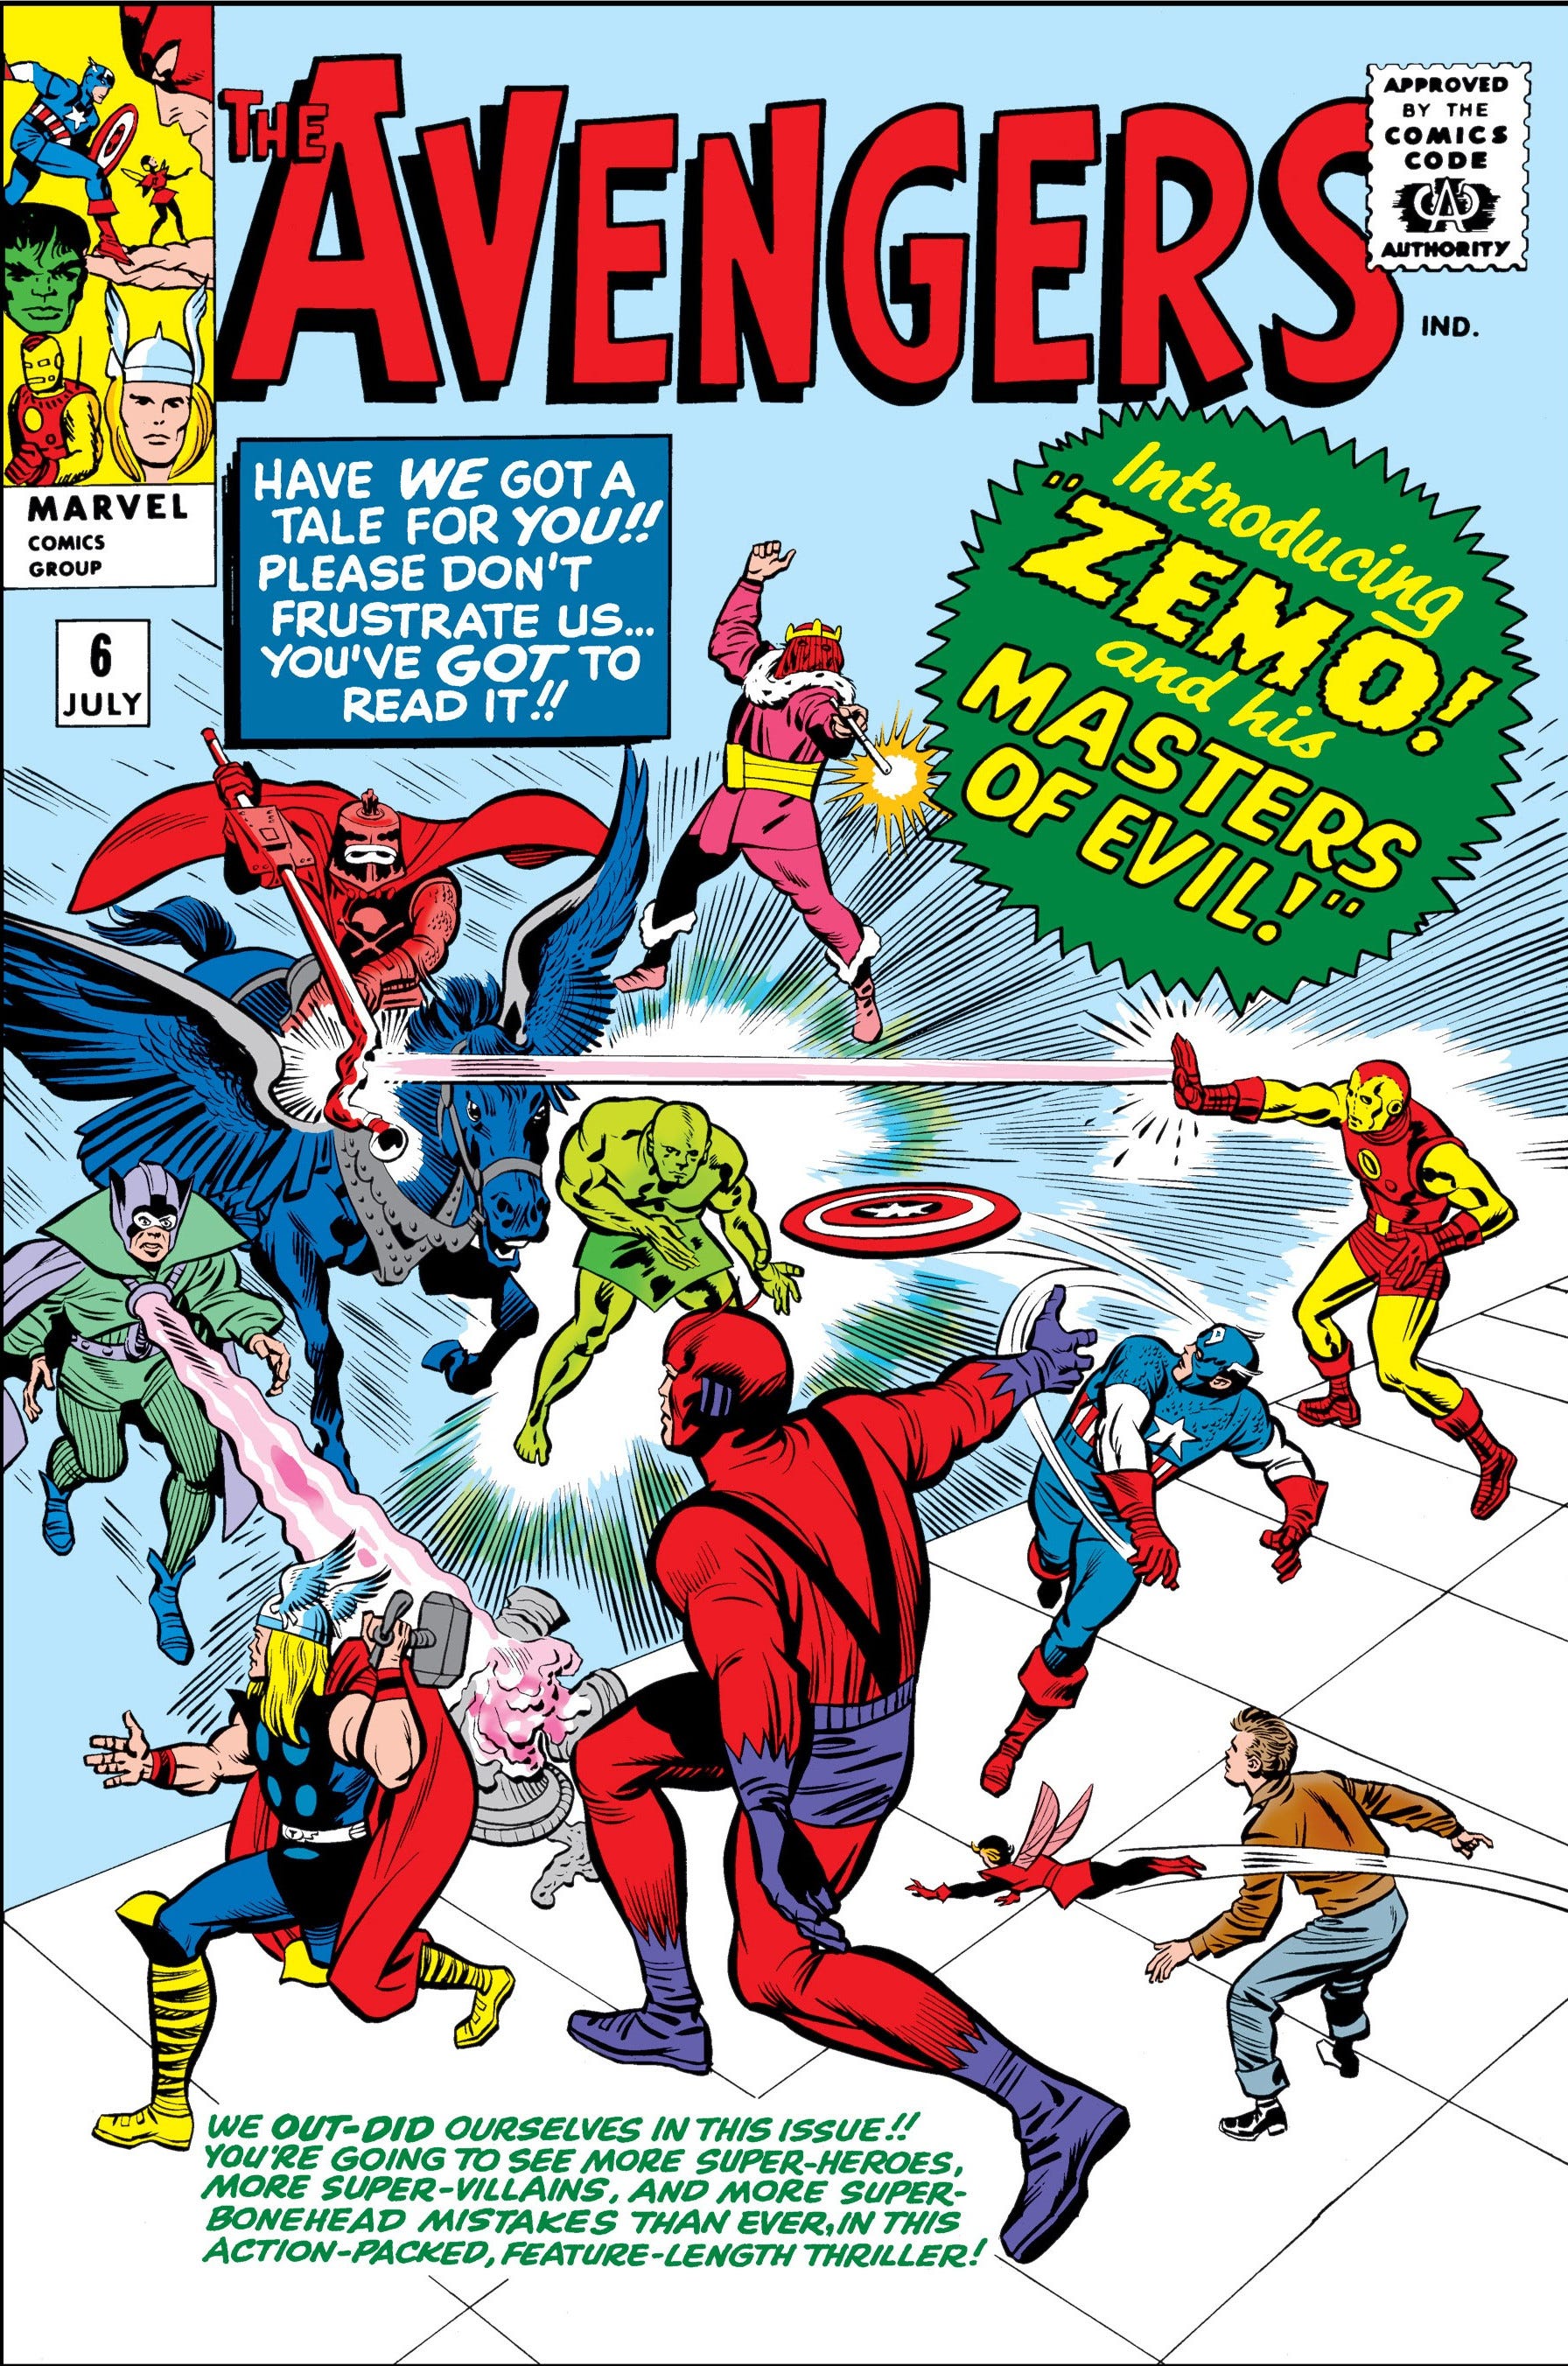 Episode 137: Does Evil Exist? (Avengers #6) -- July 1964